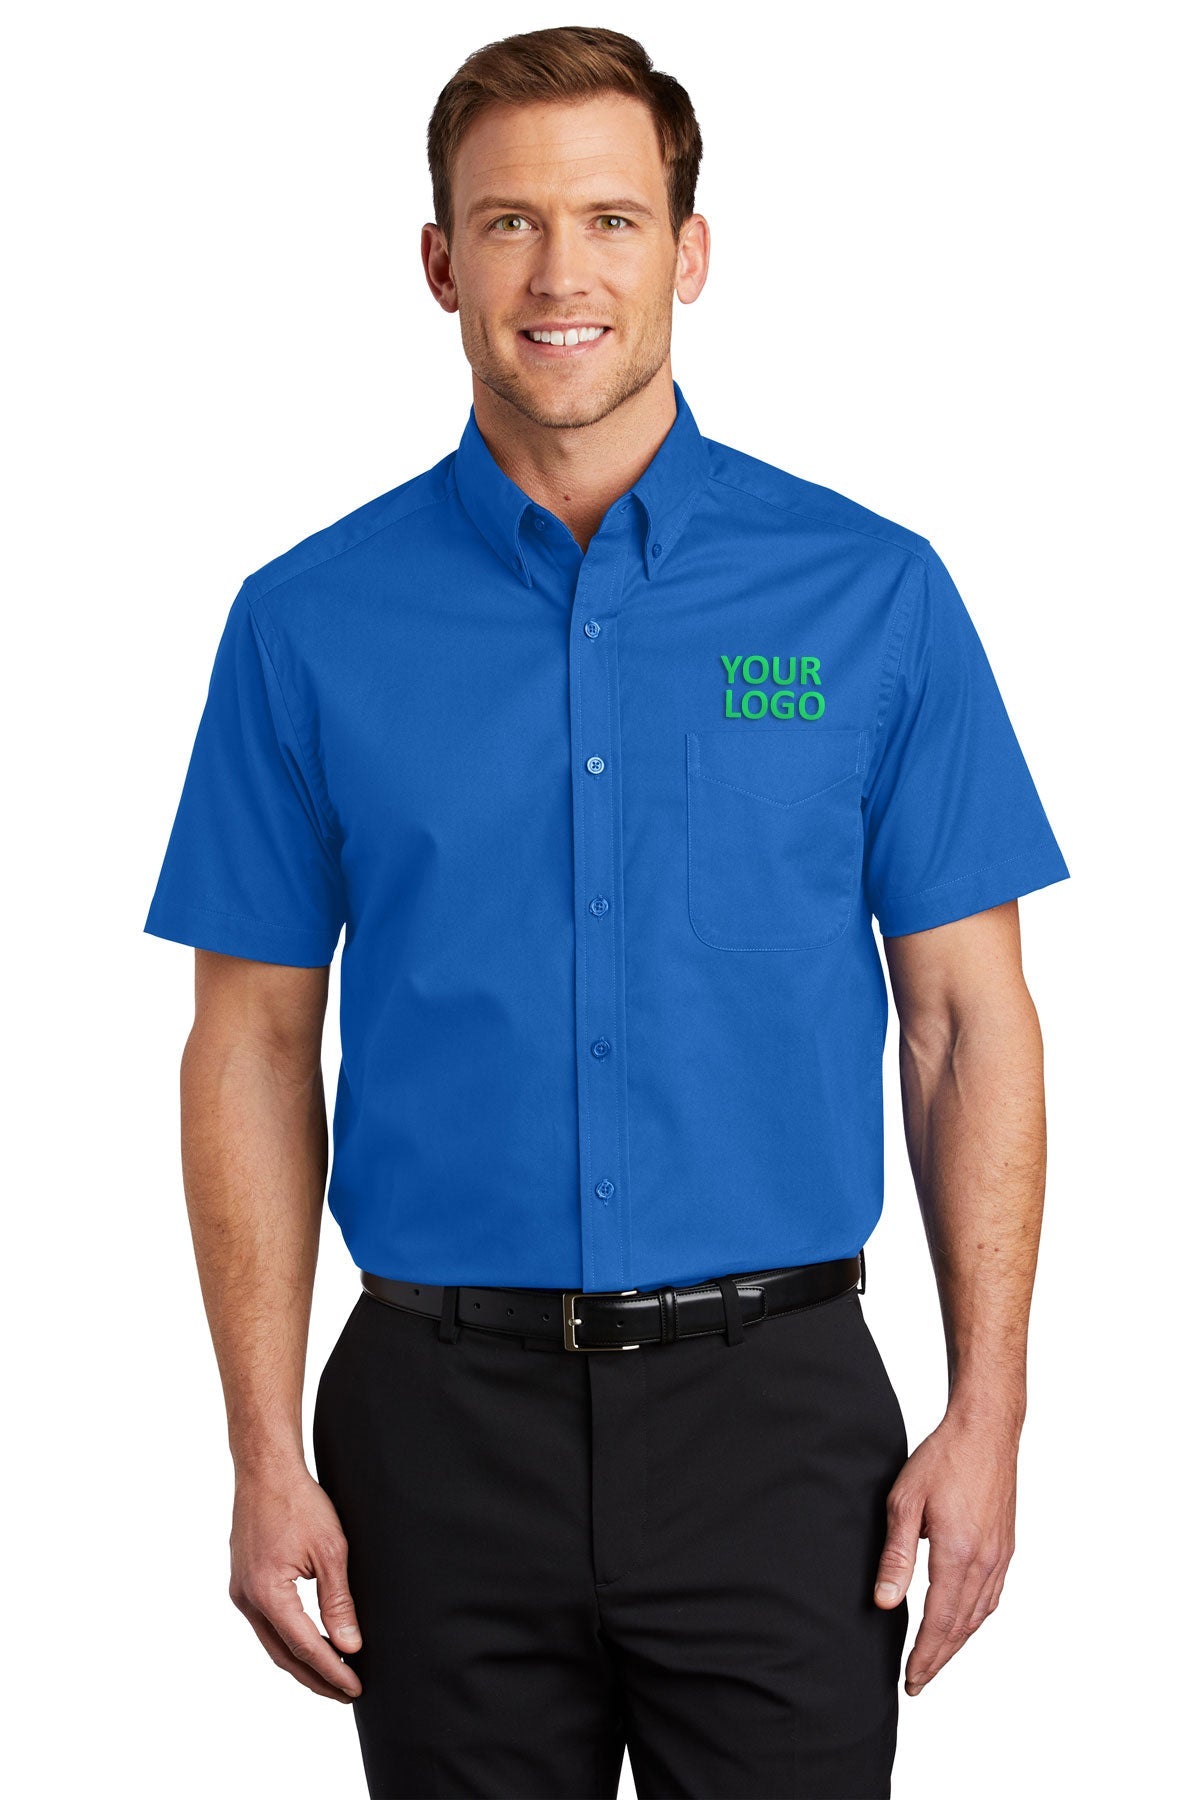 Port Authority Strong Blue TLS508 custom work shirts